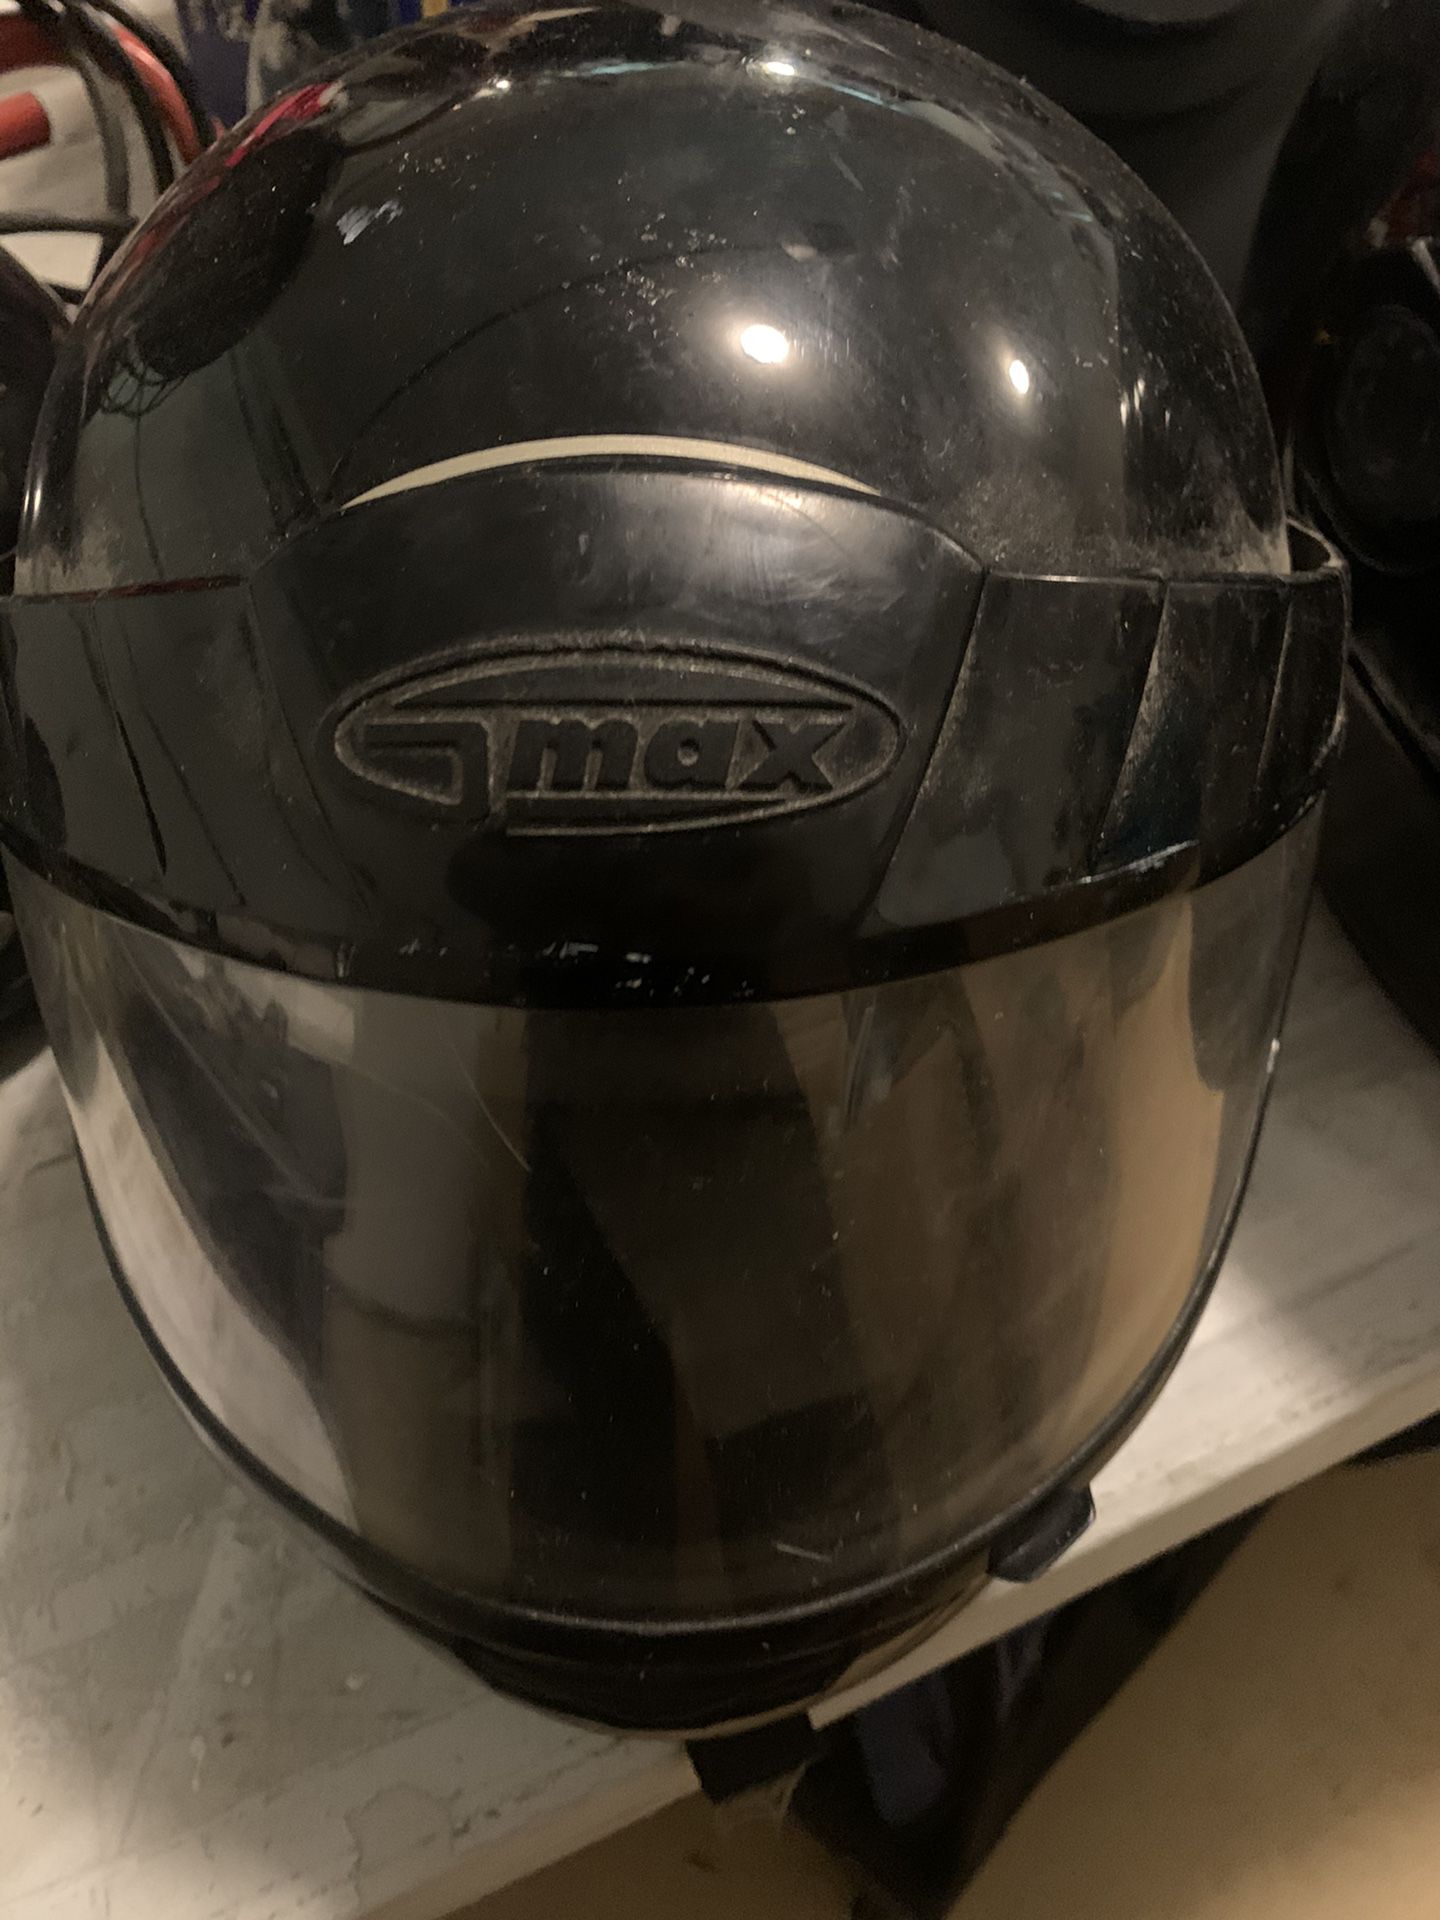 Max snowmobile helmet and visor